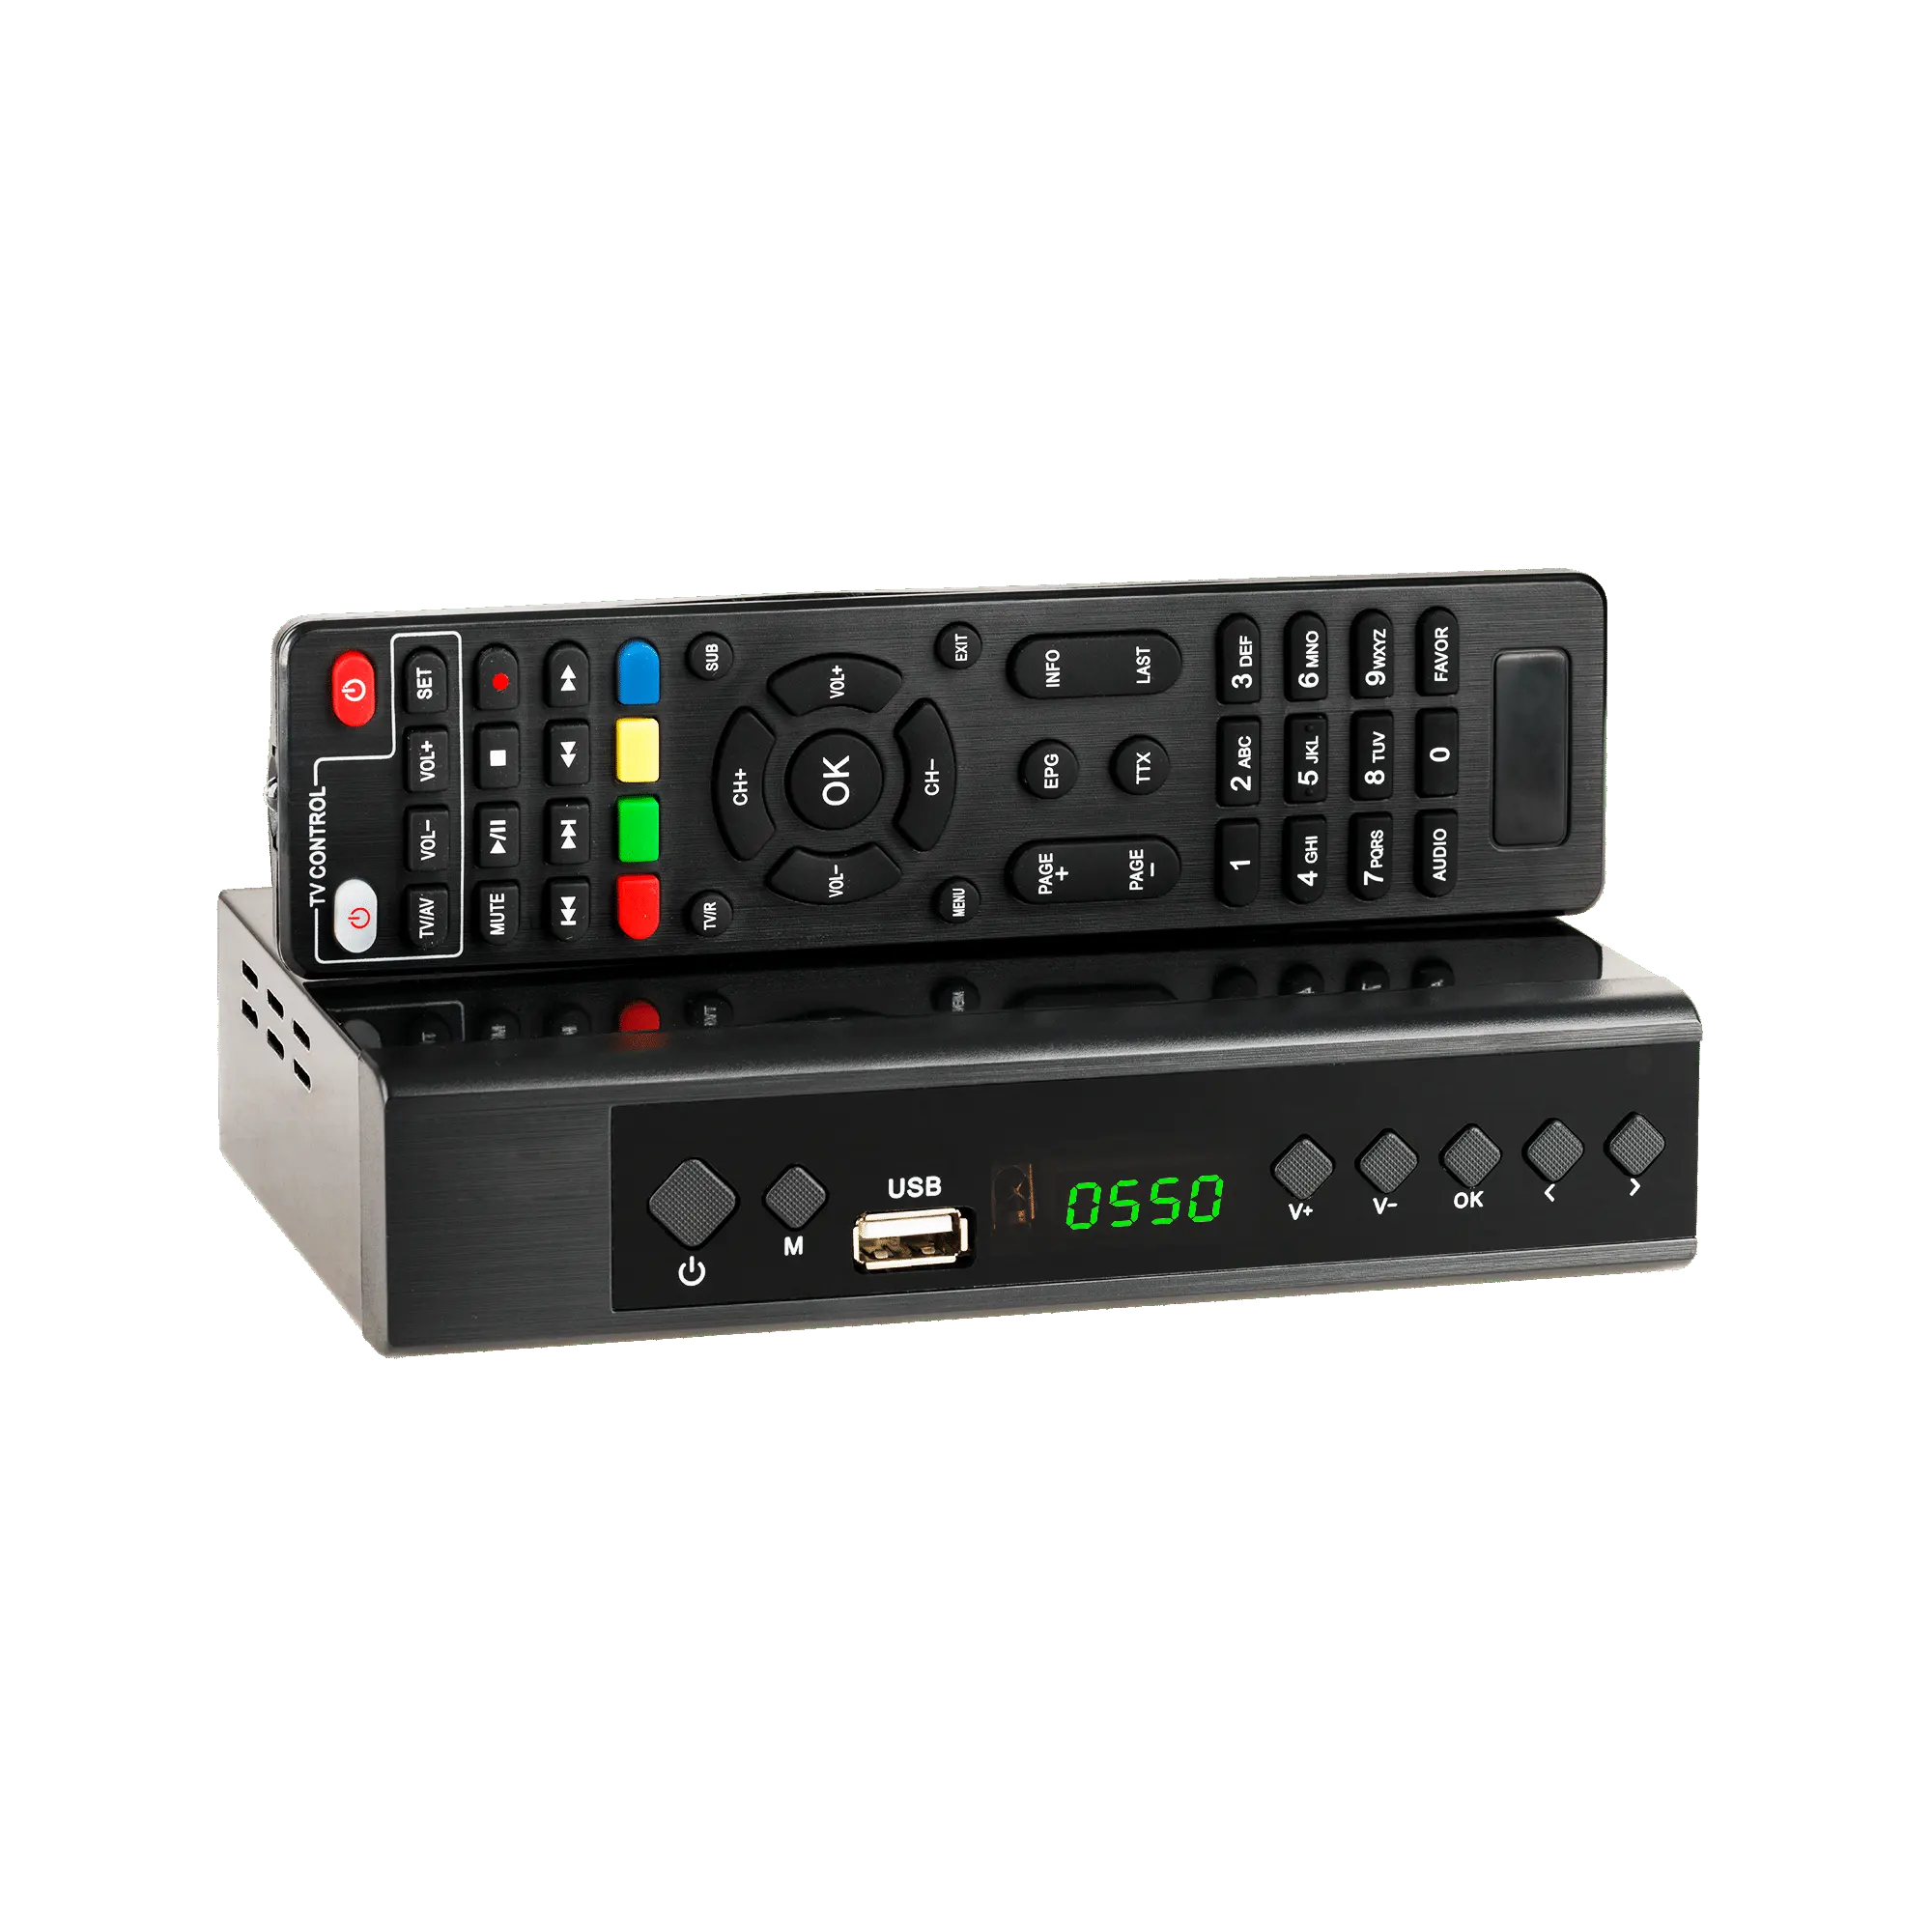 Isdb-t-decodificador de señal de Brasil, nuevo modelo, compatible con youtube, isdbt, mpeg4, hd, isdb-t, tv digital, tvbox